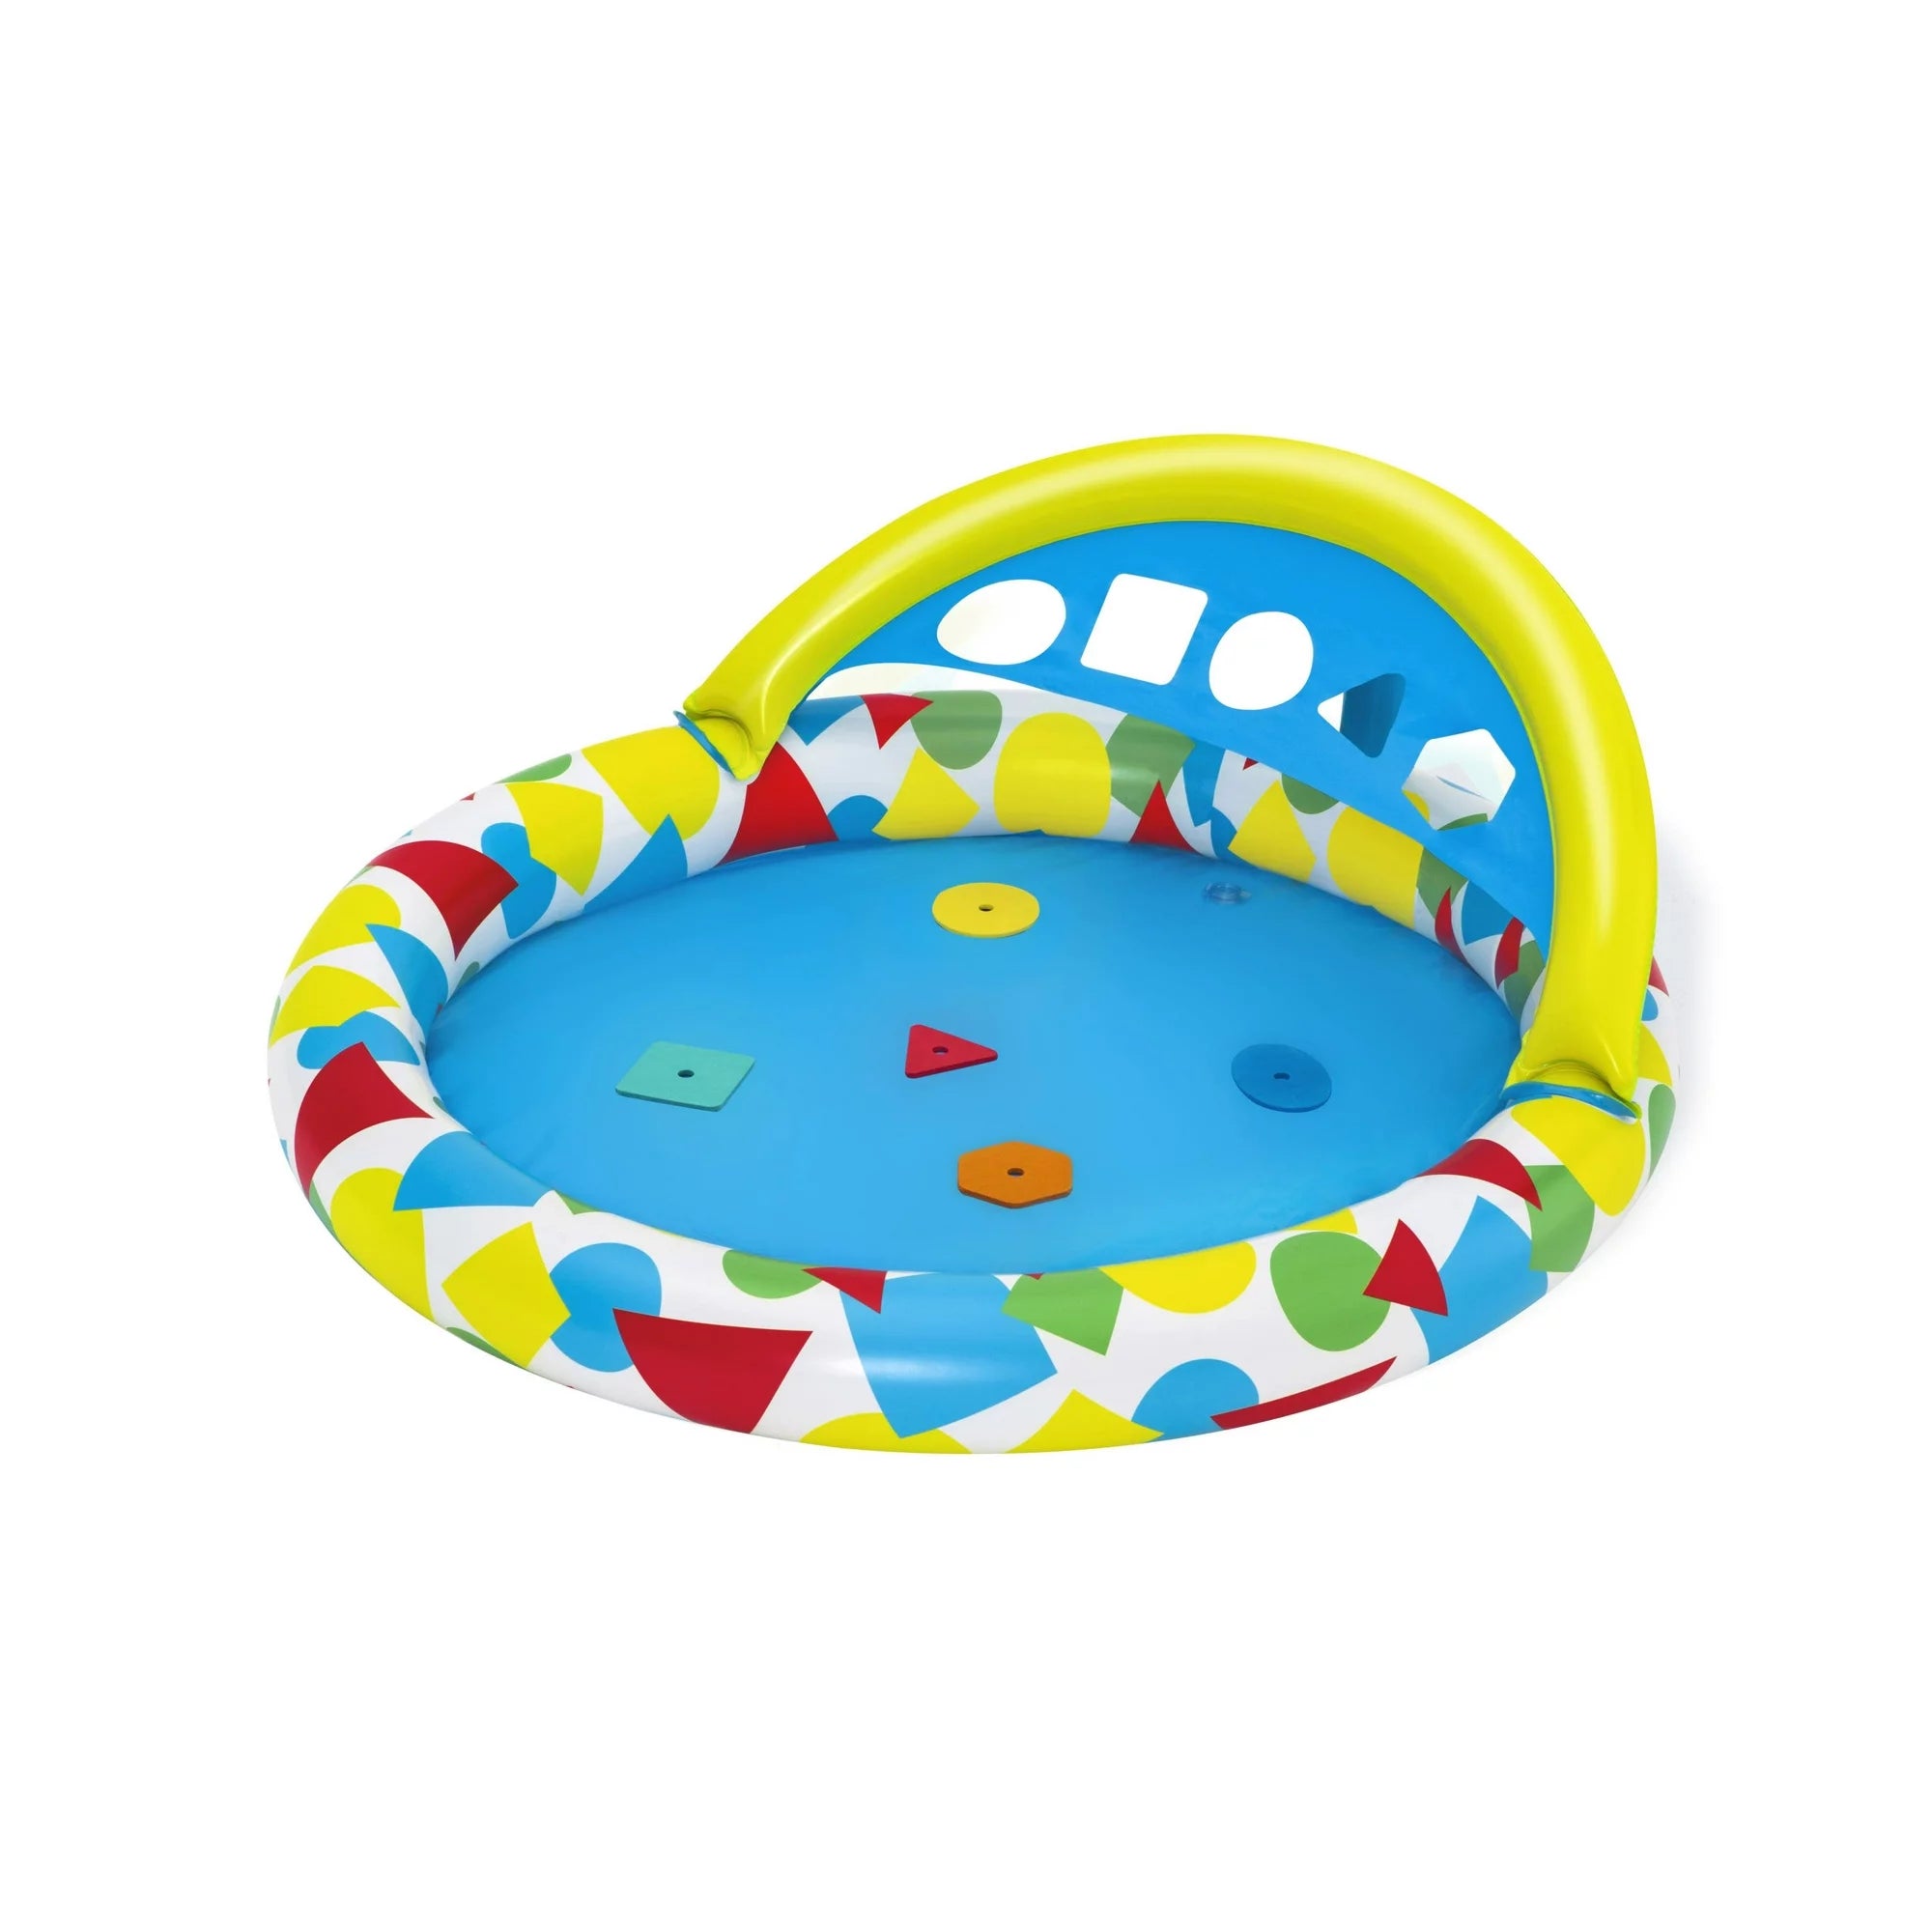 Splash & Learn Inflatable Kiddie Pool